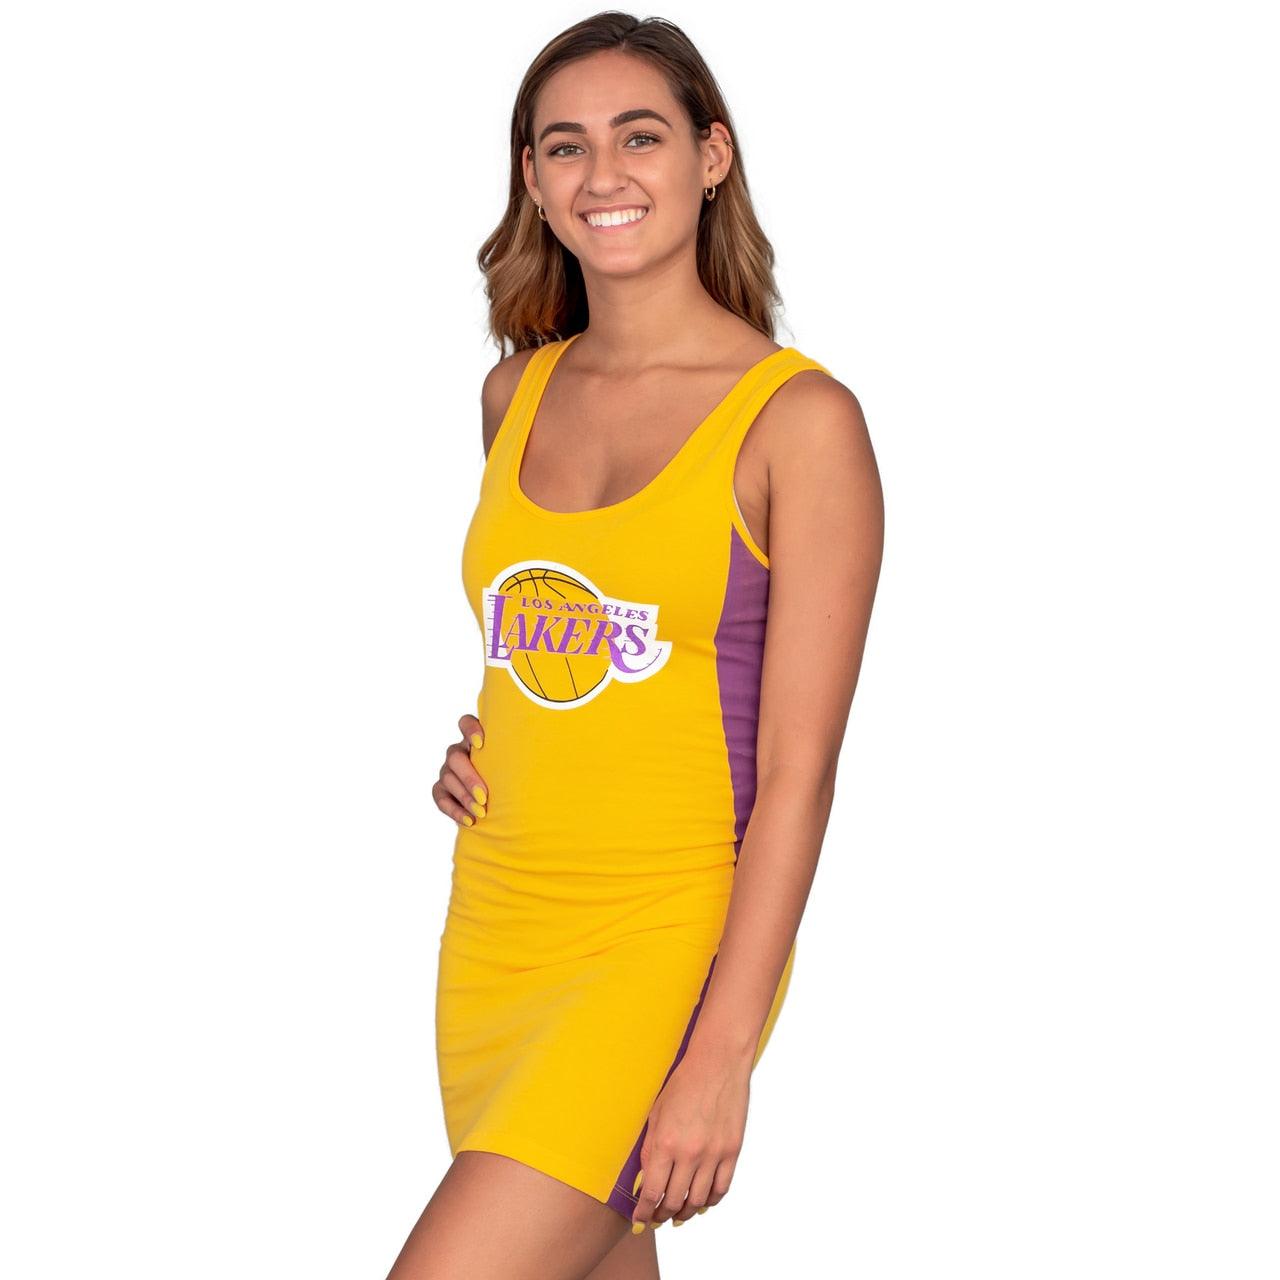 Los Angeles Lakers Laker Girls Cheerleader Tank Dress - Tank Dress